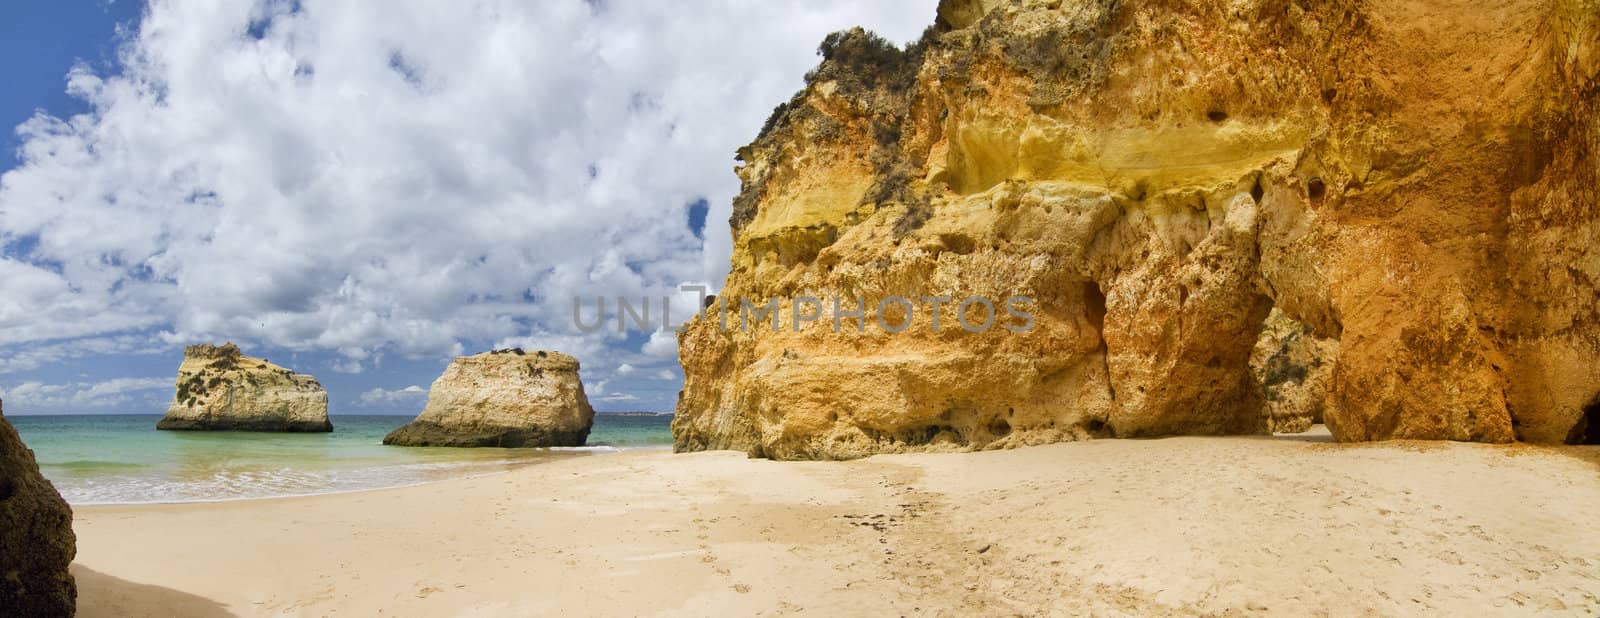 Wonderful view of a beautiful beach in the Prainha area, in the Algarve, Portugal.
